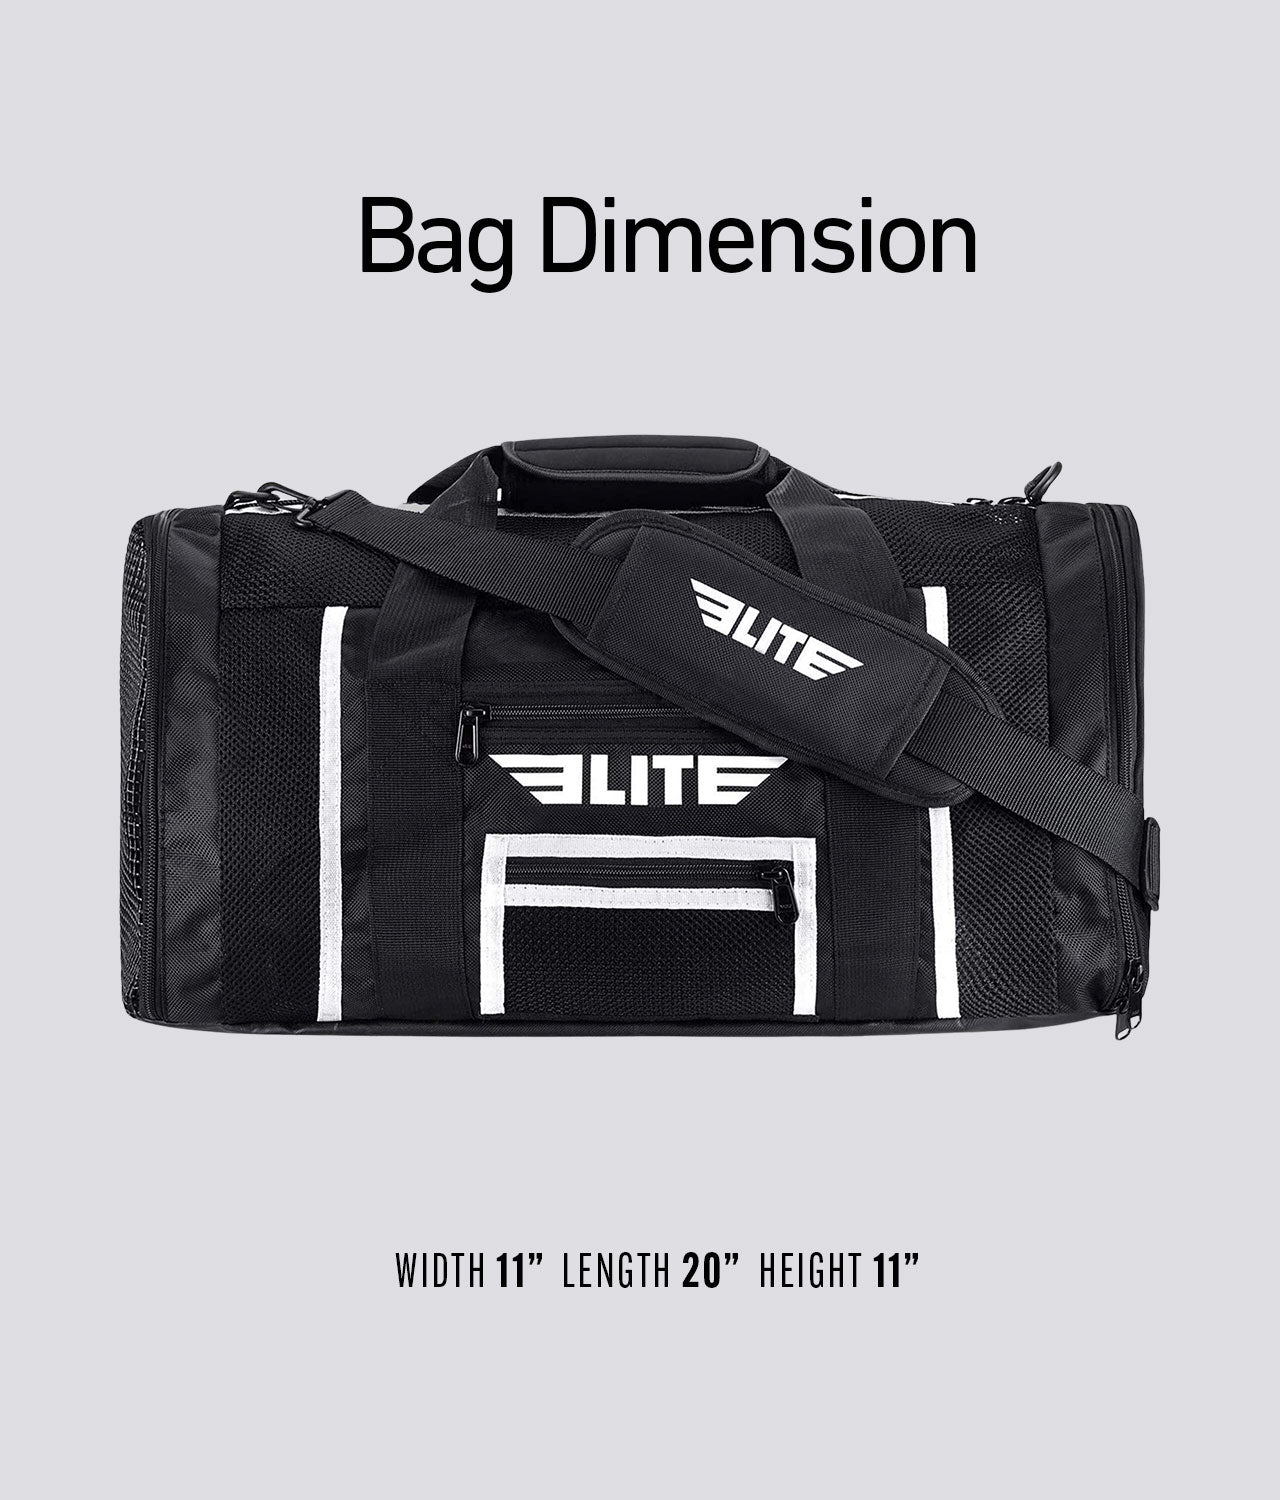 Elite Sports Mesh Black Large Boxing Gear Gym Bag Demension